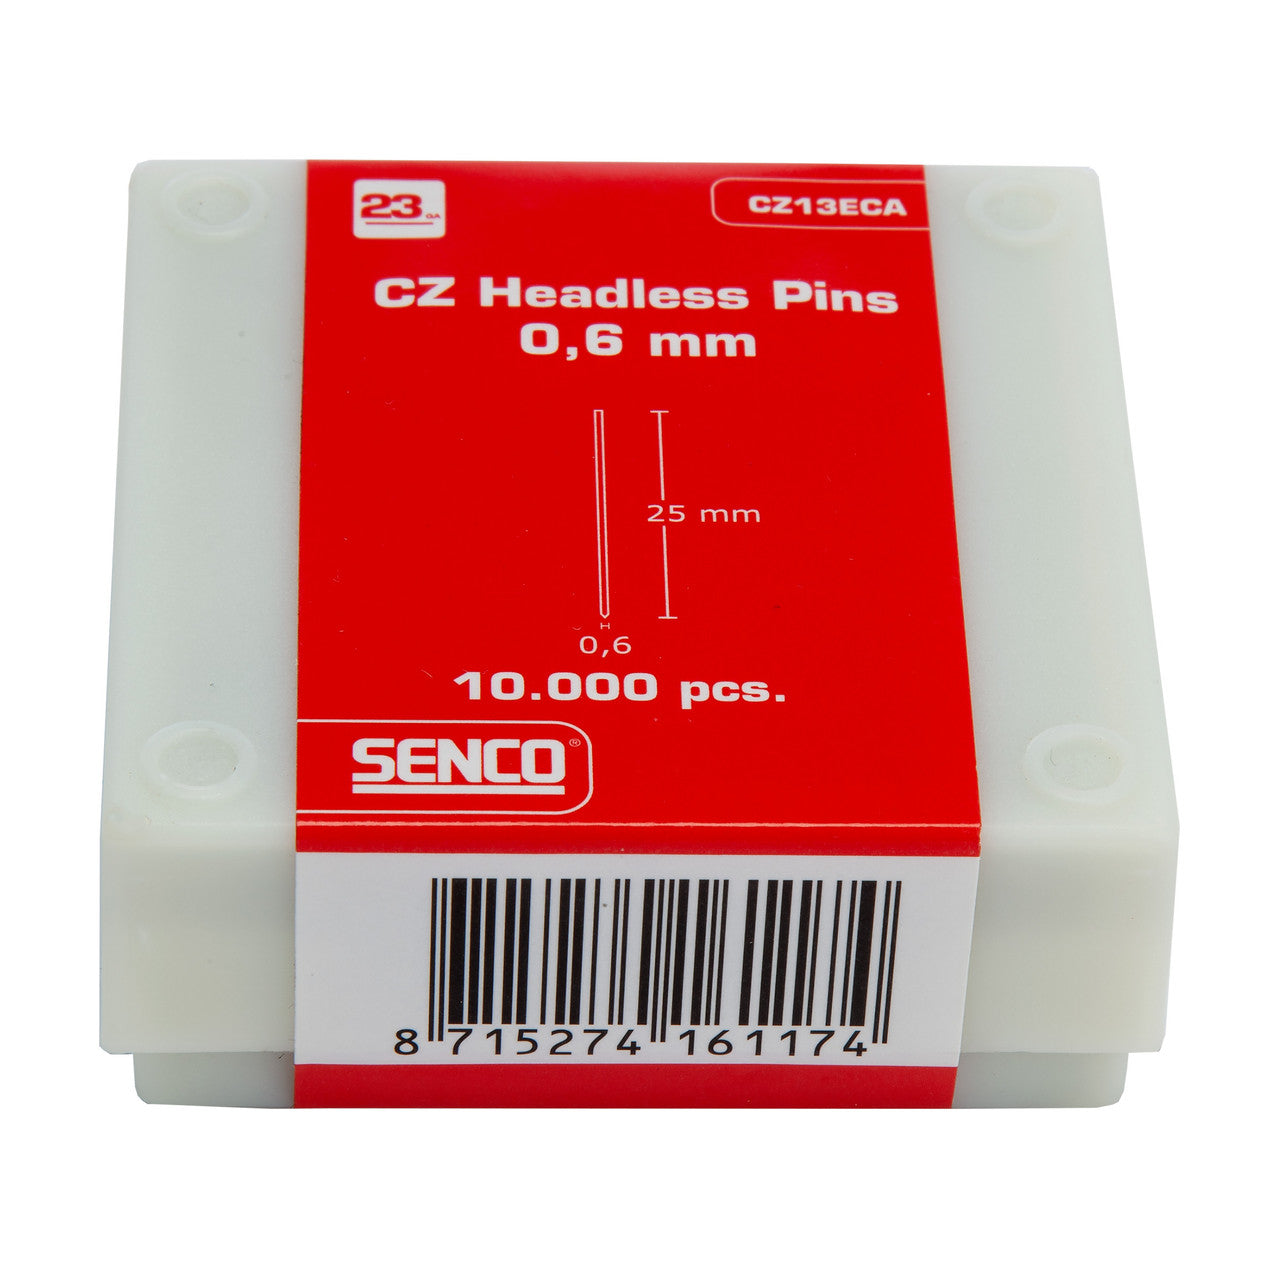 Senco CZ13ECA Galvanised Collated CZ Headless Pins 23 Gauge 0.6mm x 25mm (10,000 in Box)